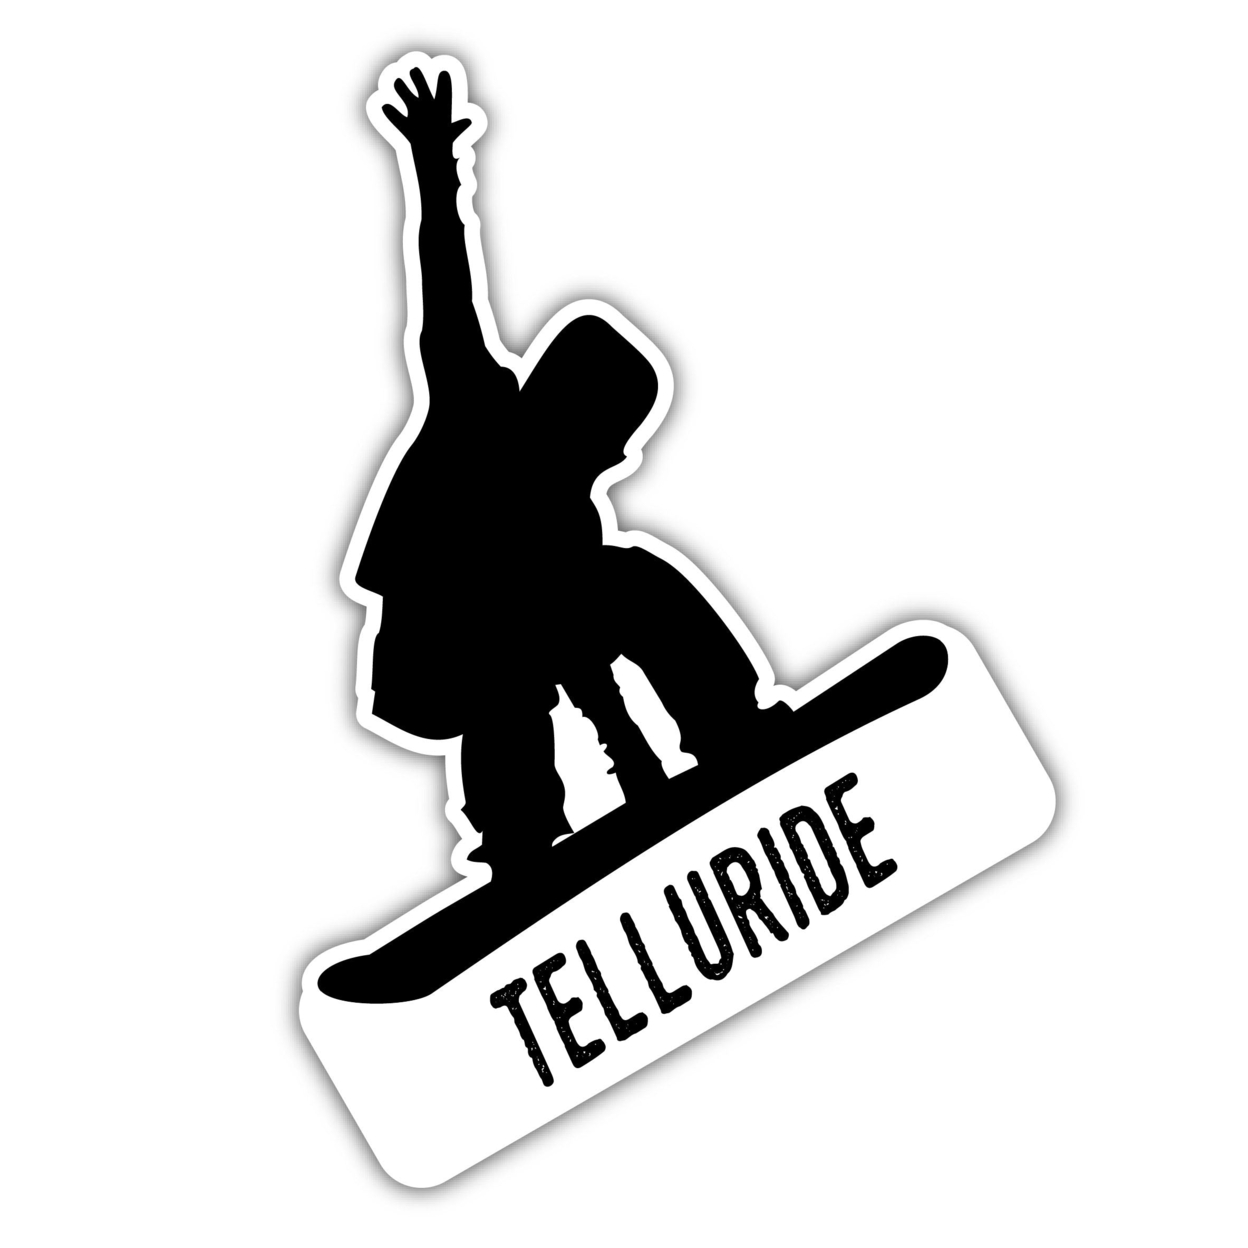 Telluride Colorado Ski Adventures Souvenir Approximately 5 X 2.5-Inch Vinyl Decal Sticker Goggle Design